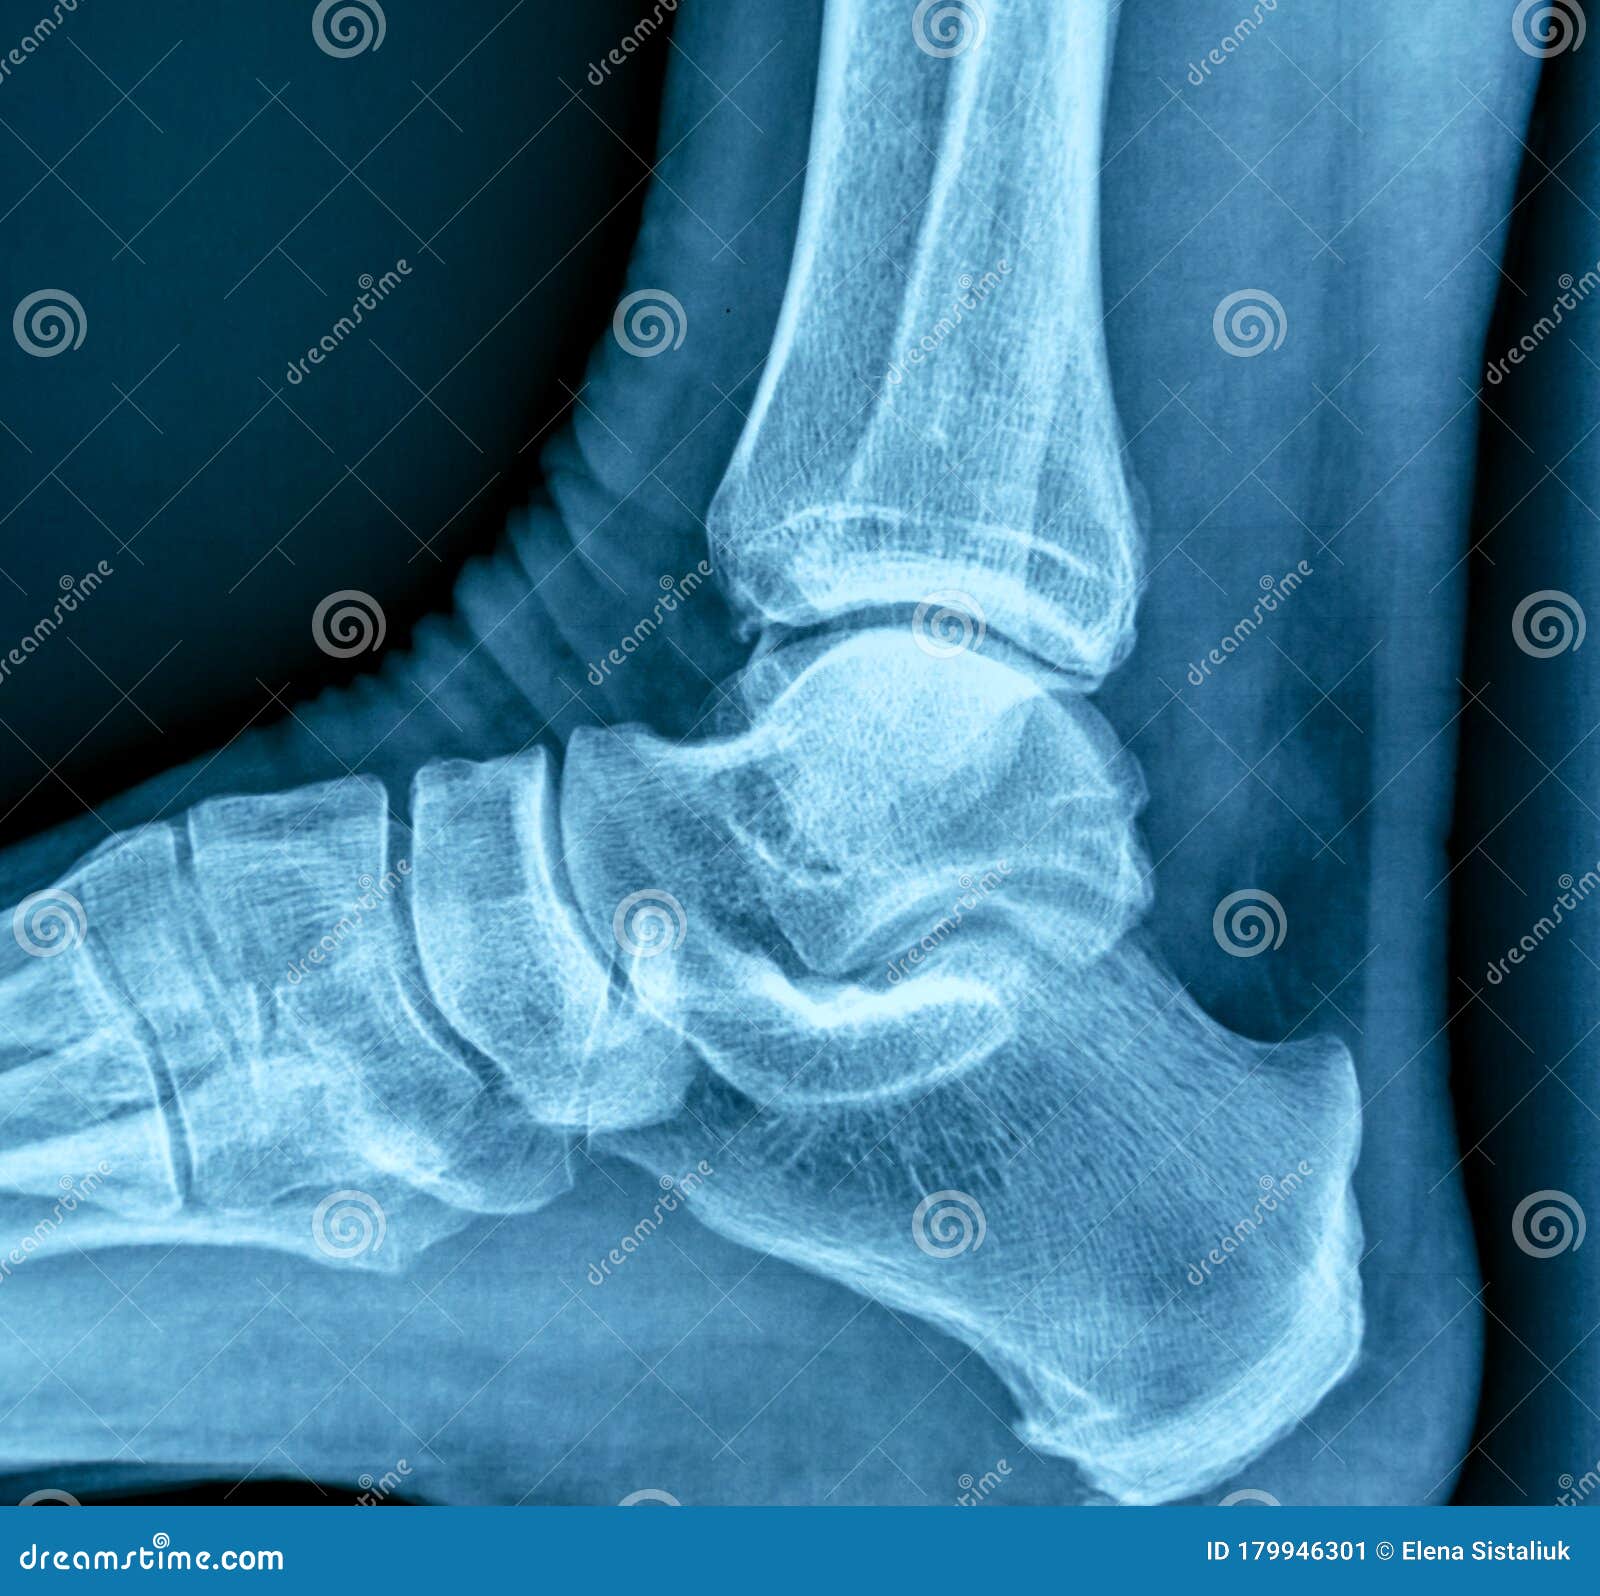 Heel Spur Treatment - Moore Foot & Ankle | Spring, TX